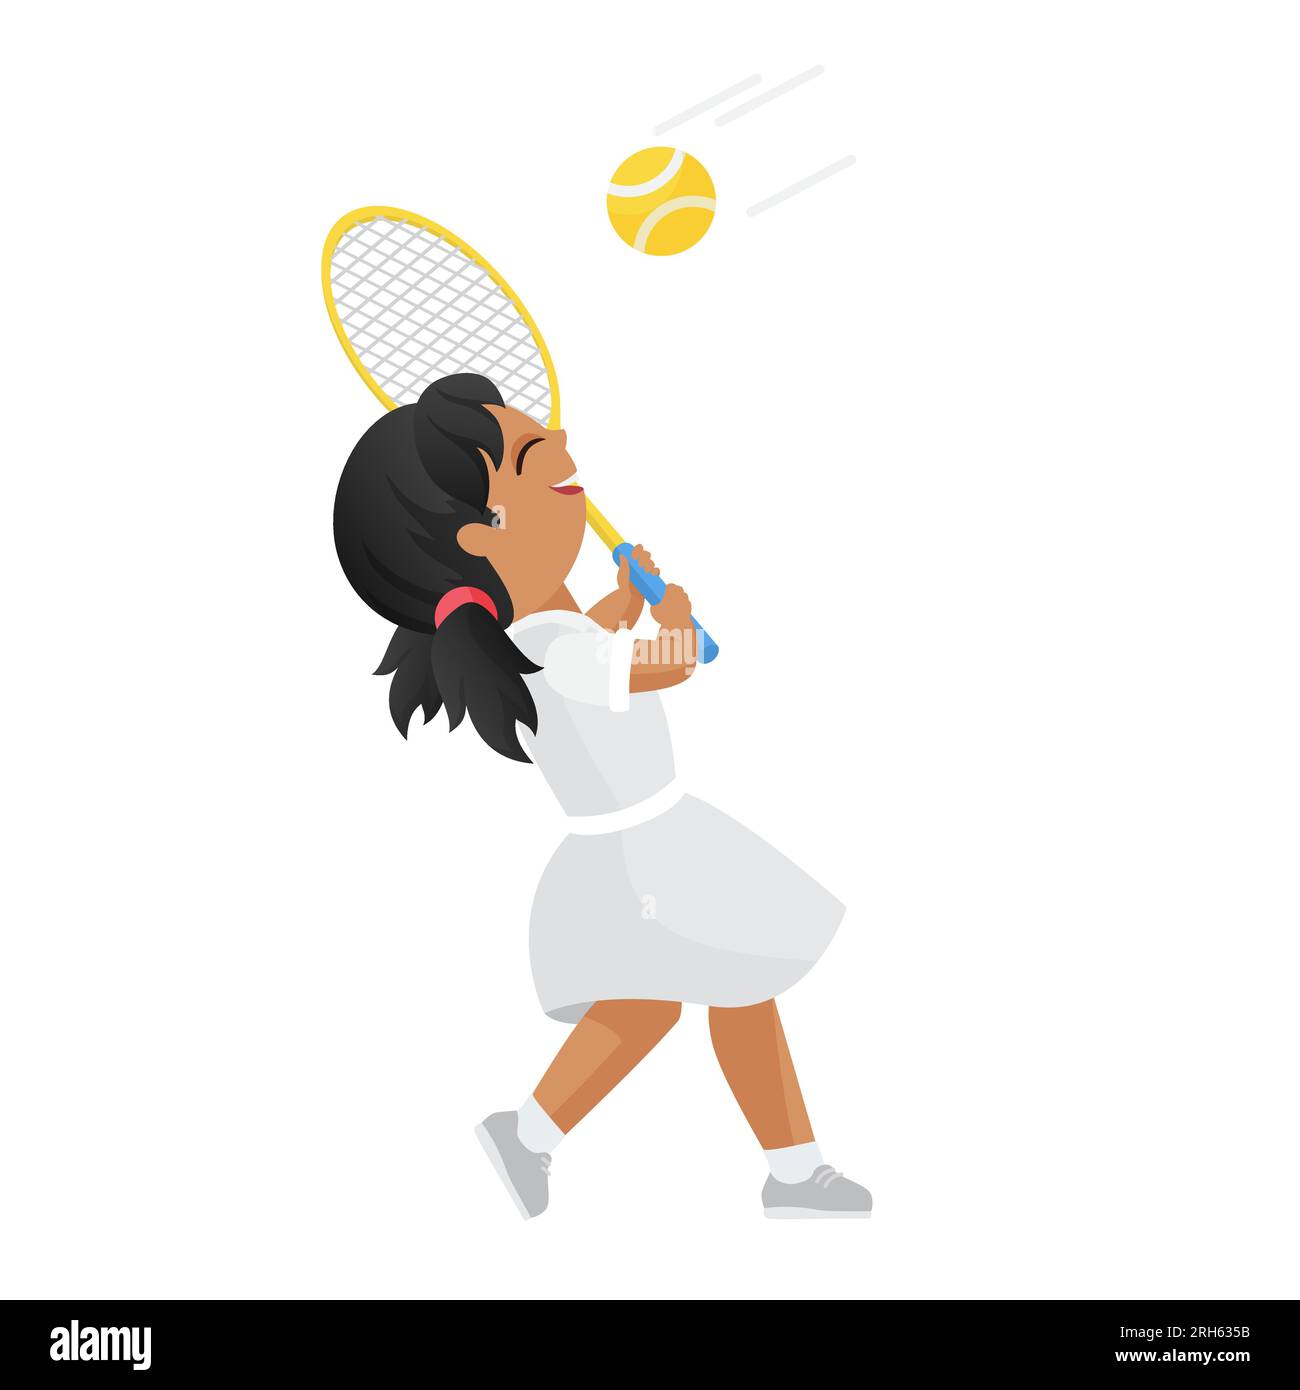 Little girl playing tennis. Outdoor sport activity for children, active kids vector cartoon illustration Stock Vector